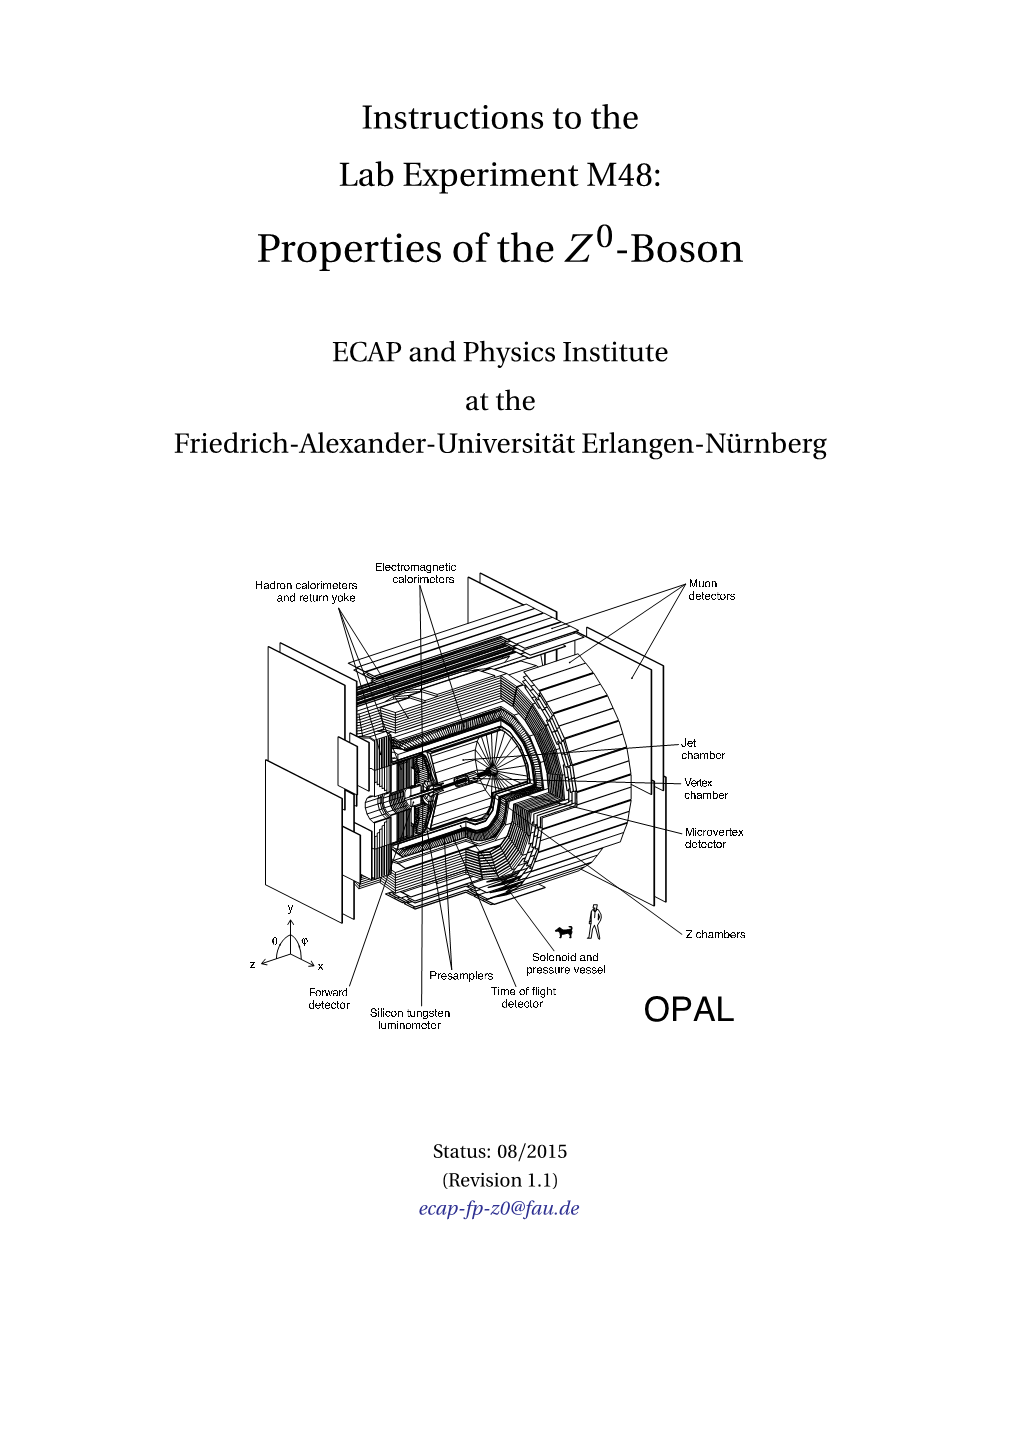 Properties of the Z -Boson